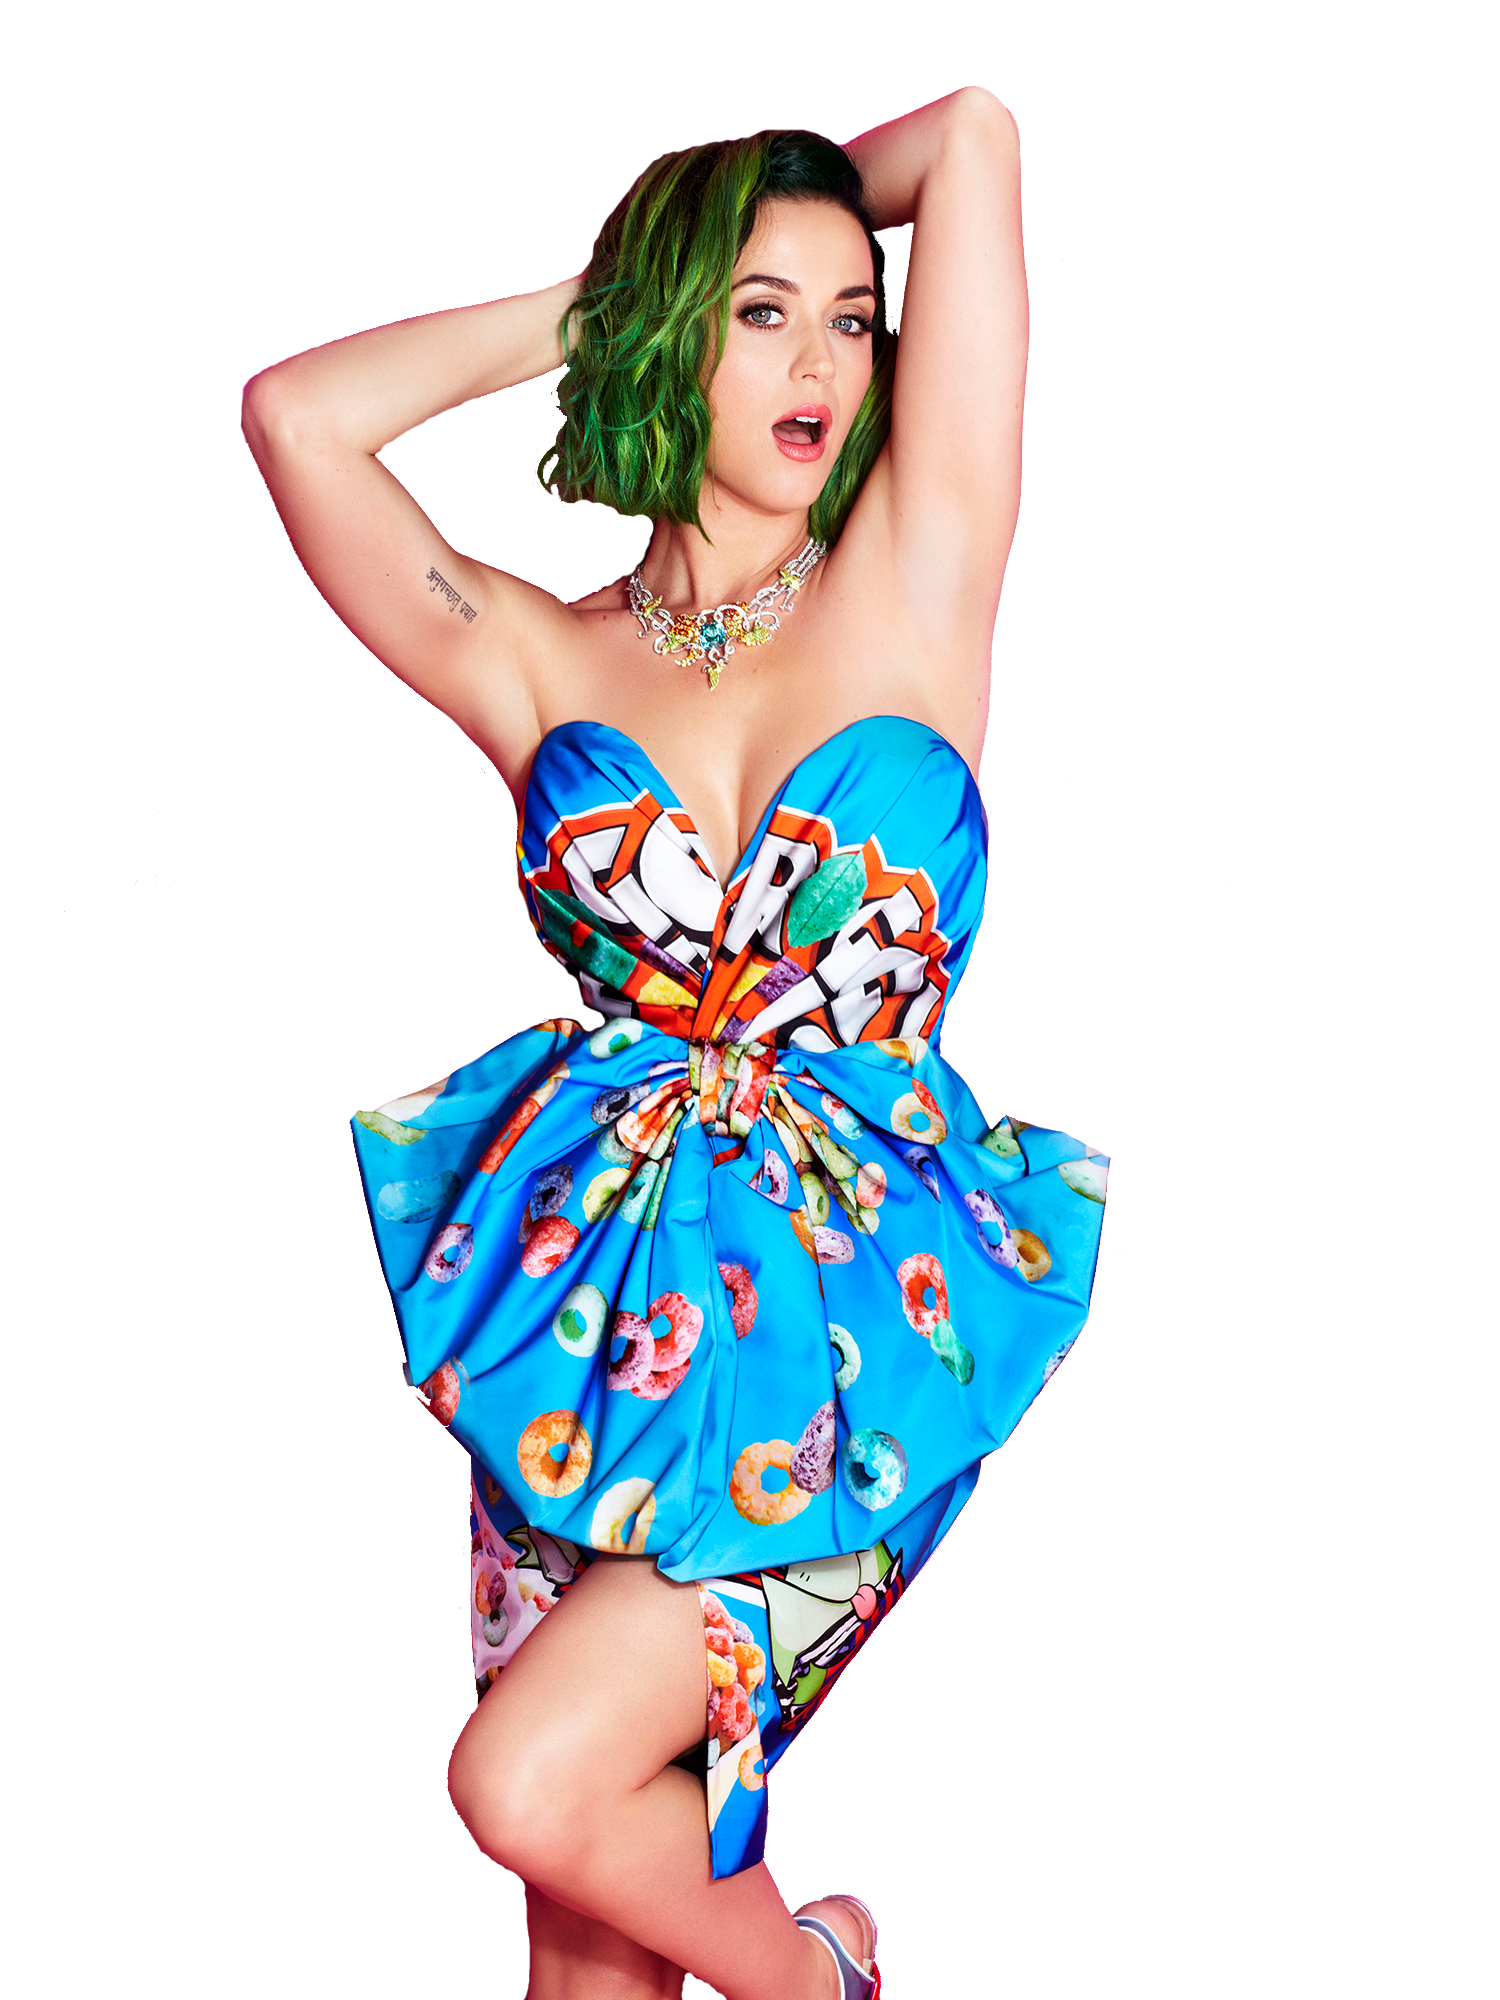 Download Katy Perry Hd HQ PNG Image FreePNGImg.